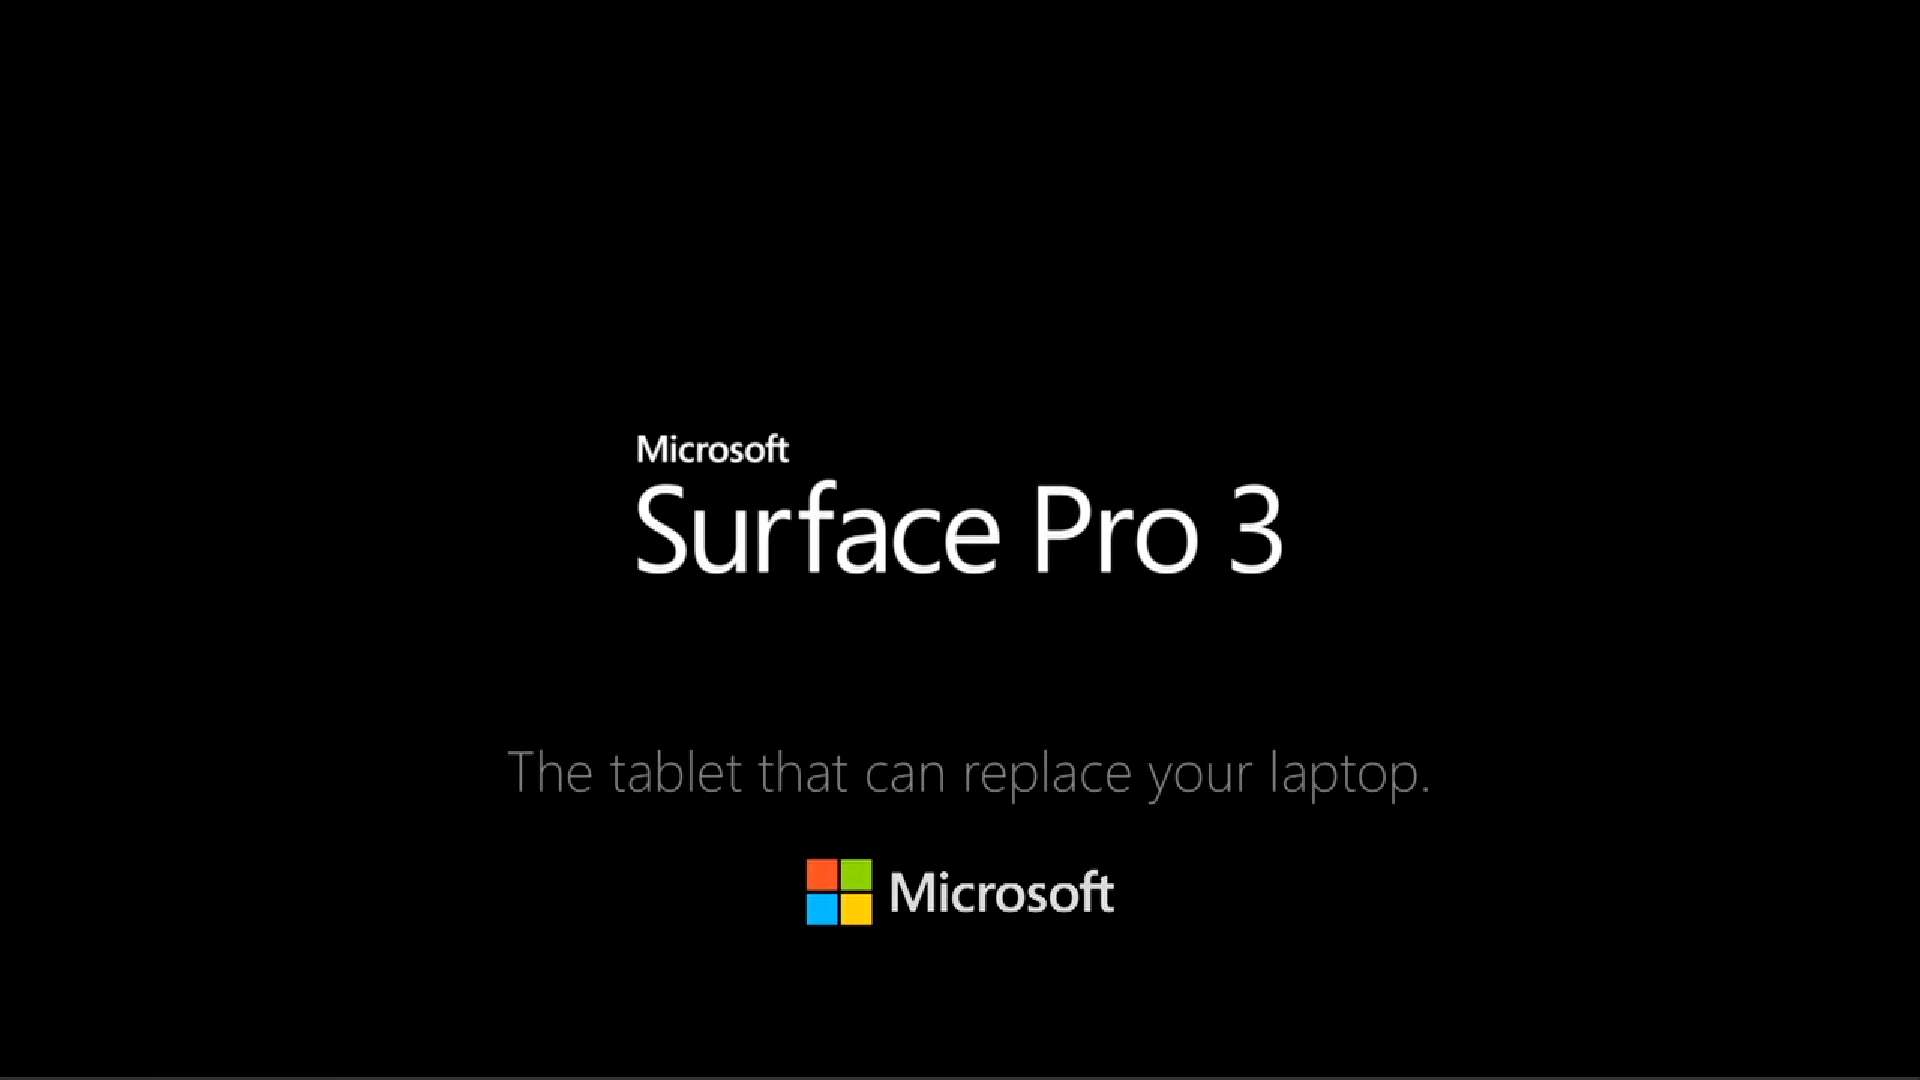 Tags Microsoft Surface Pro Windows